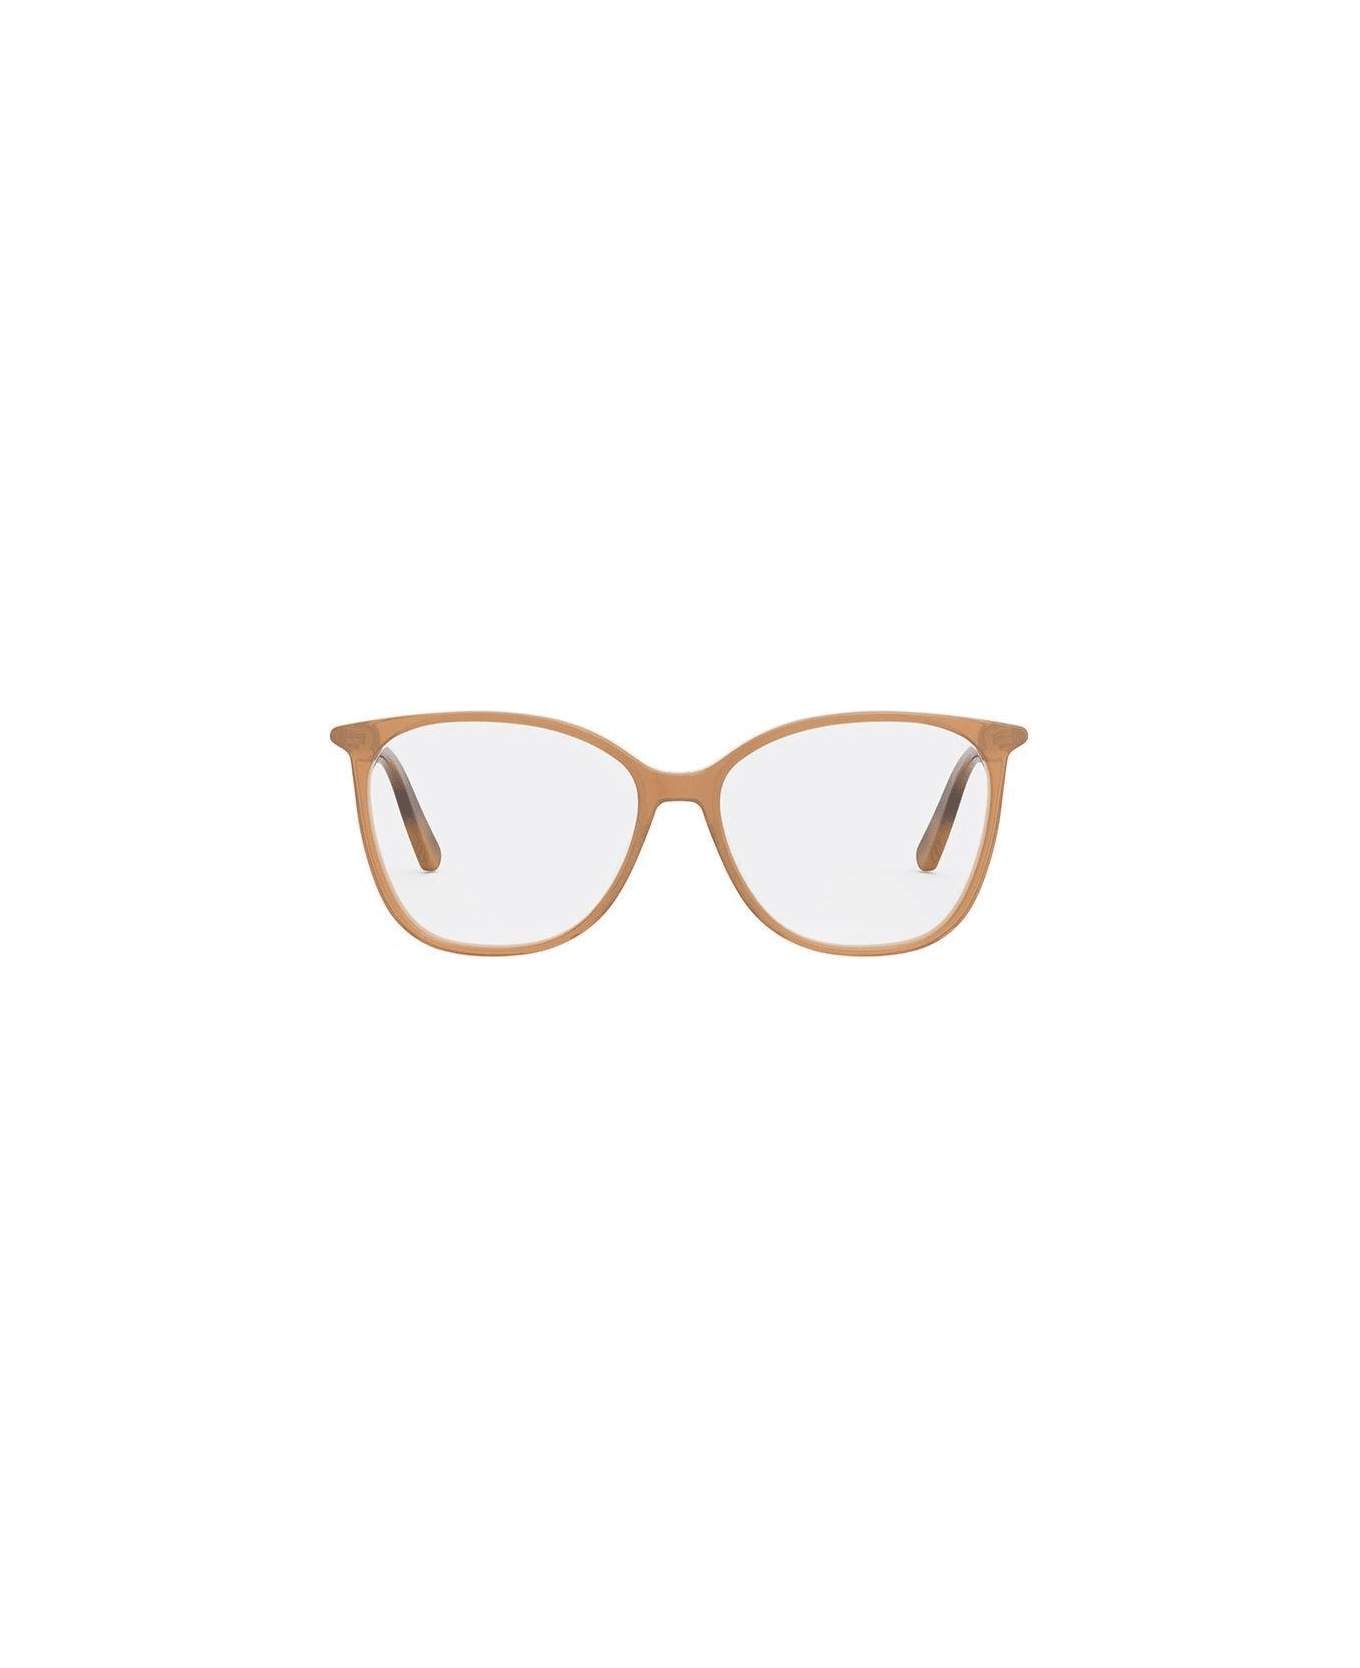 Dior Eyewear Butterfly Frame Glasses - 7000